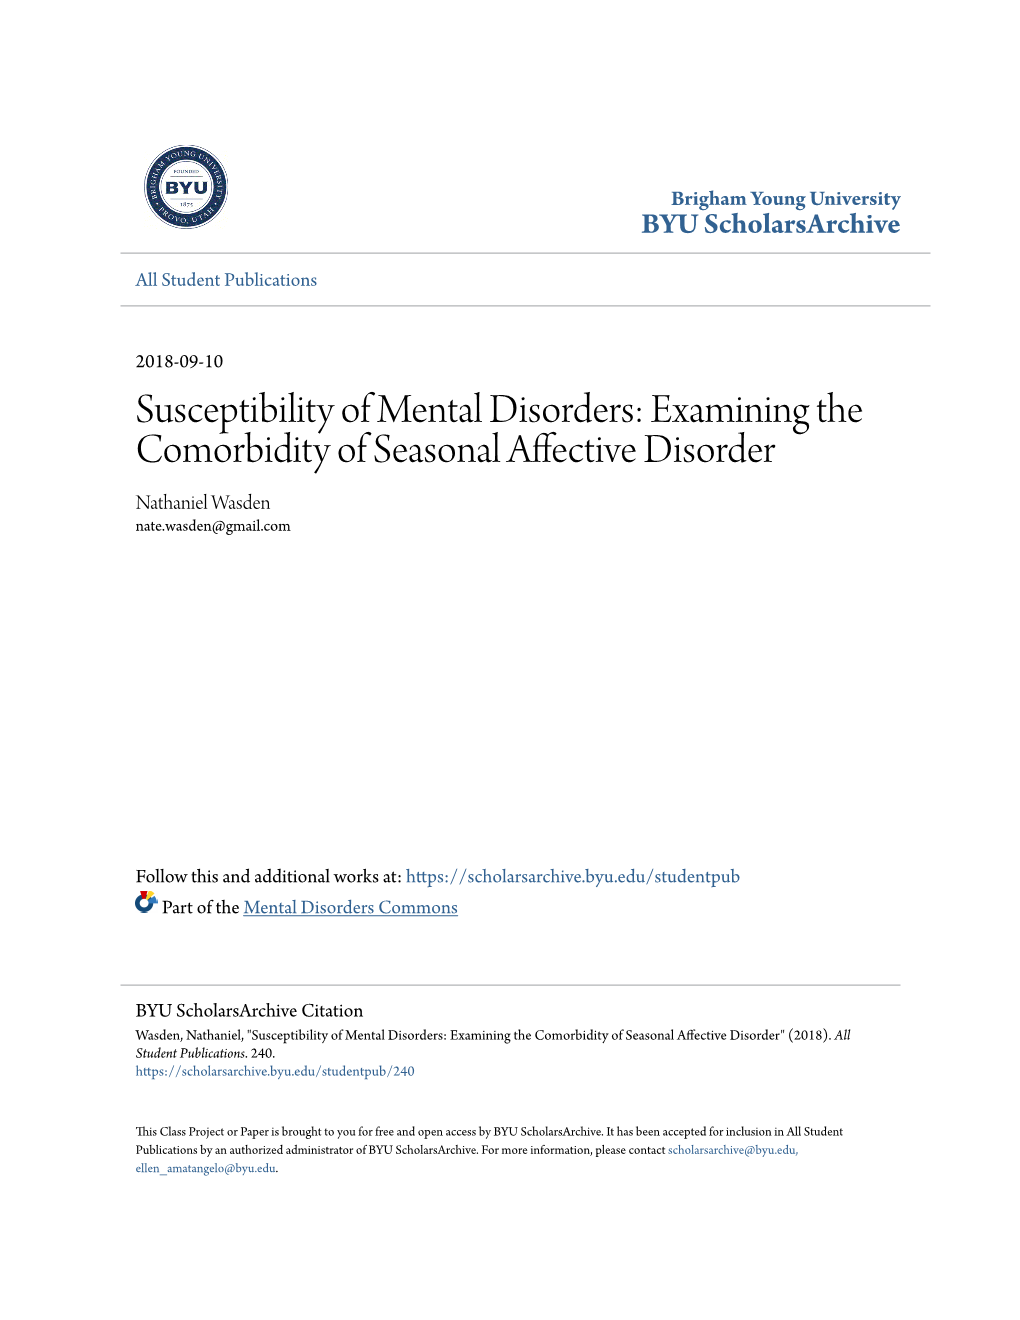 Examining the Comorbidity of Seasonal Affective Disorder Nathaniel Wasden Nate.Wasden@Gmail.Com